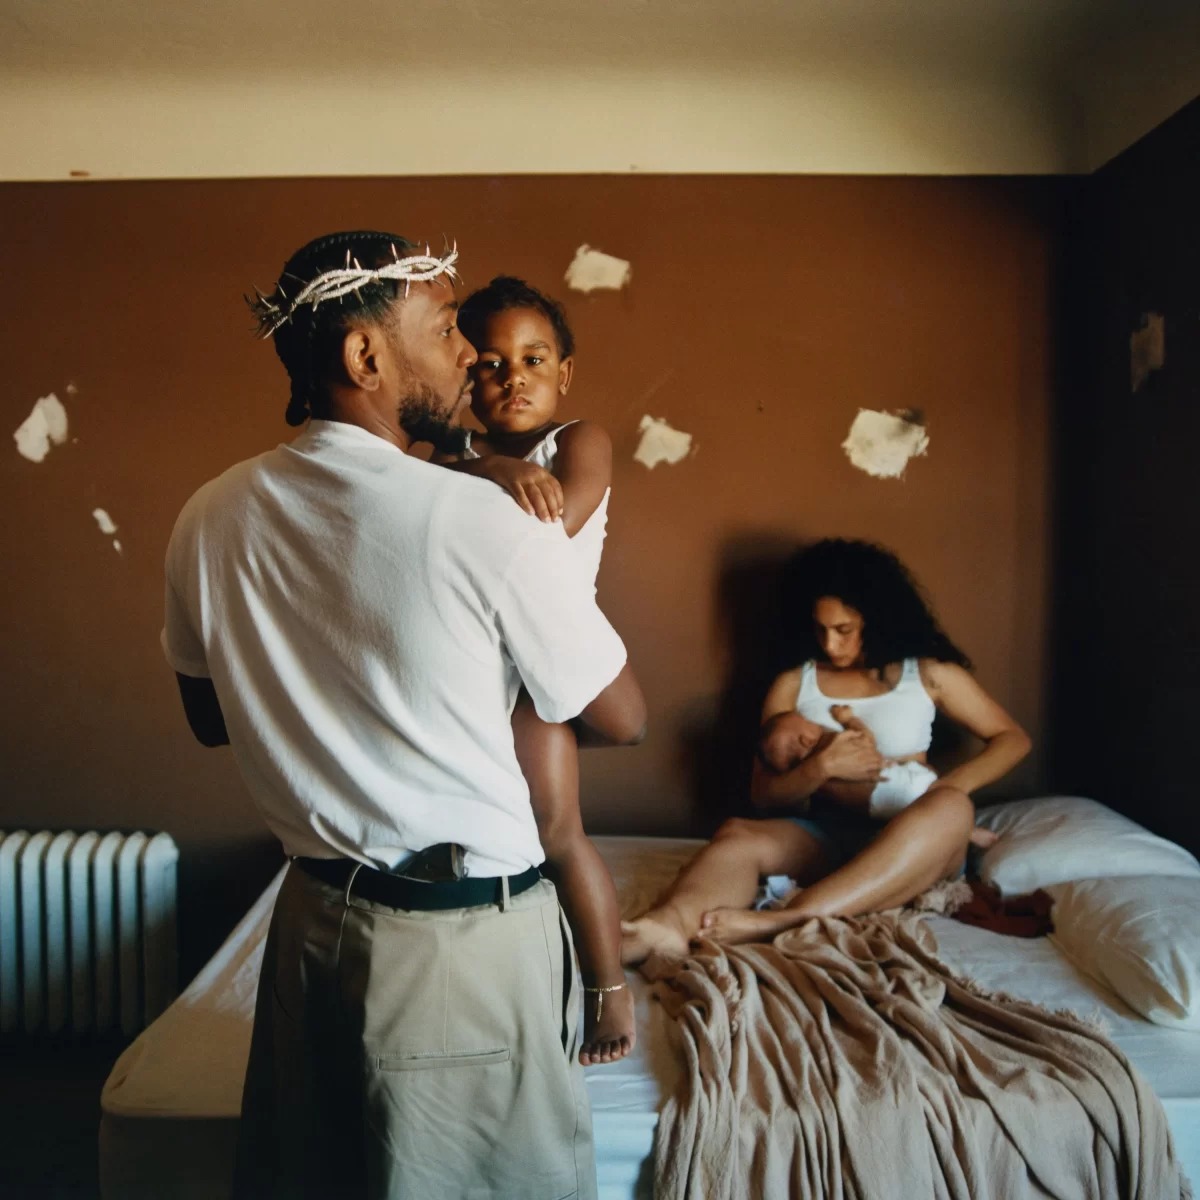 Kendrick Lamars fifth studio album: Mr. Morale & The Big Steppers
